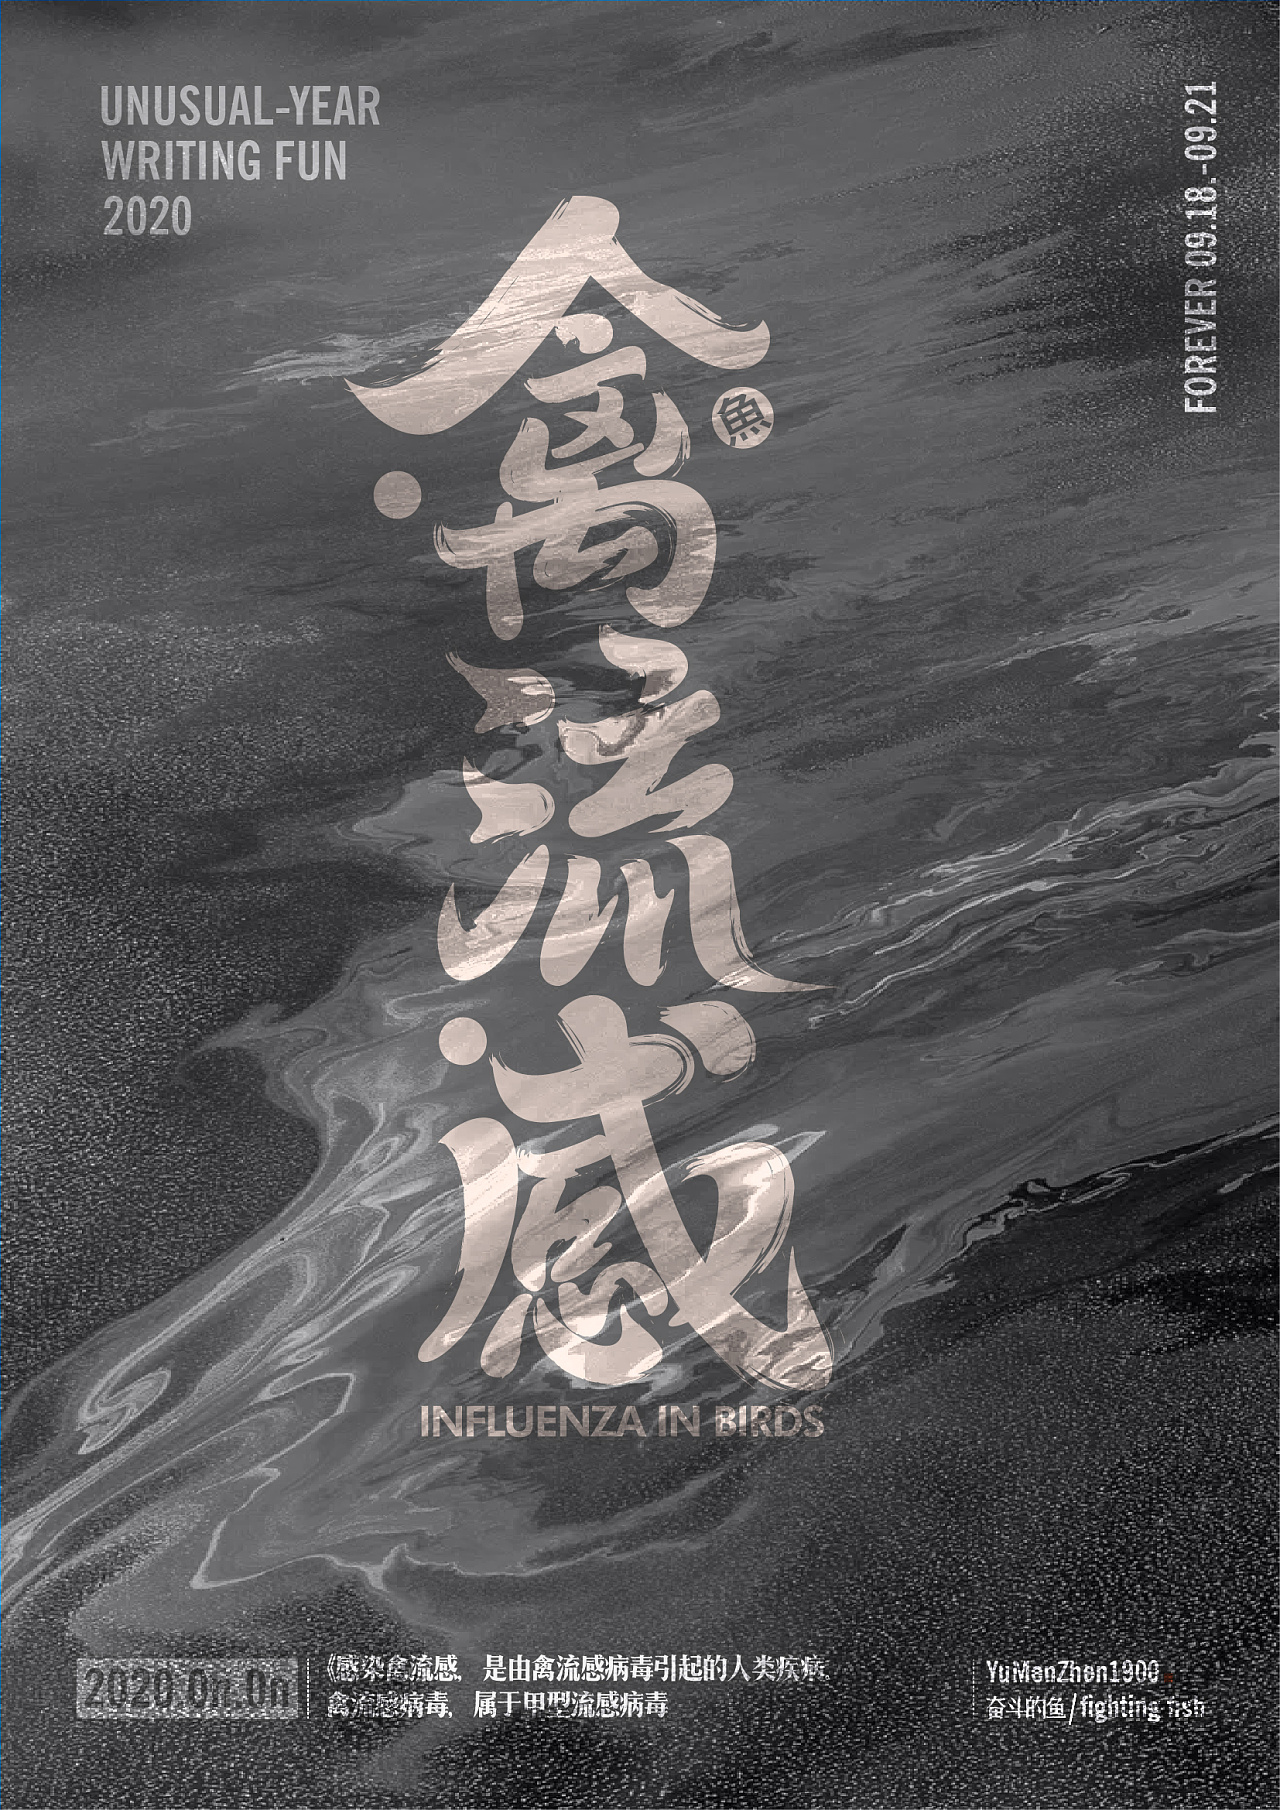 adobe illustrator chinese font free download